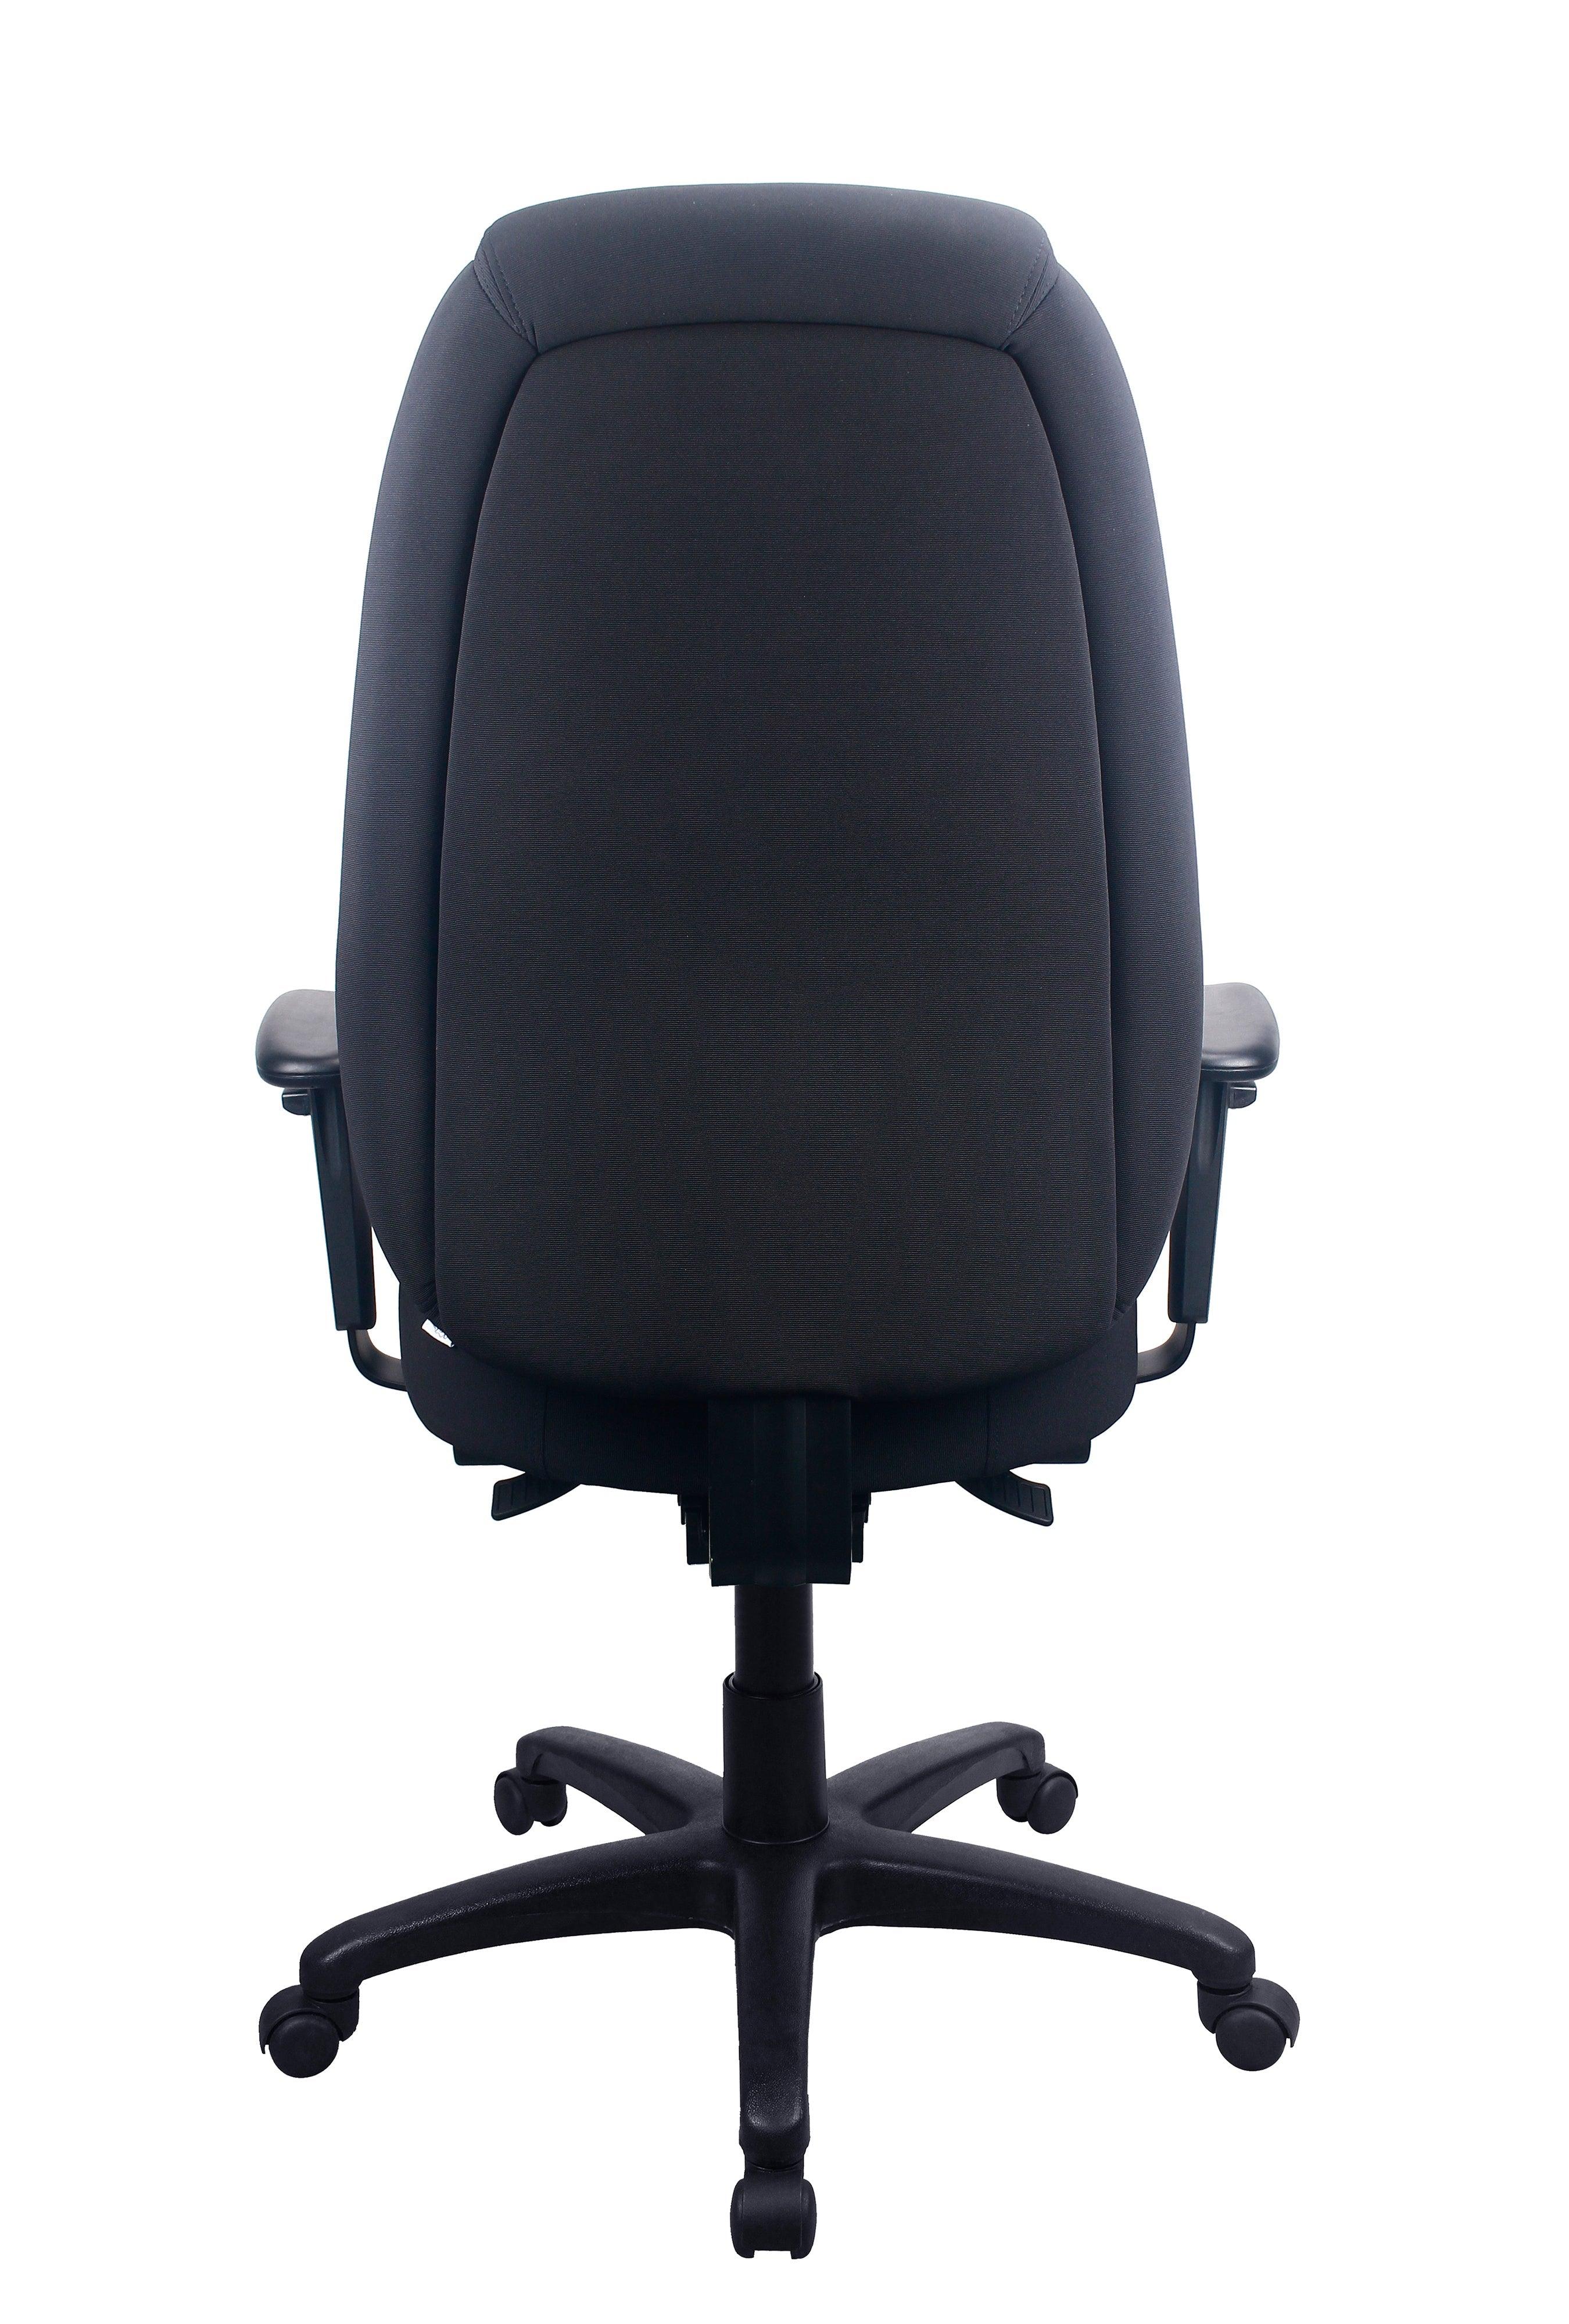 TEMPUR®-6400 Lumbar Support™ Chair: Where Design Meets Relaxation - Layton Health